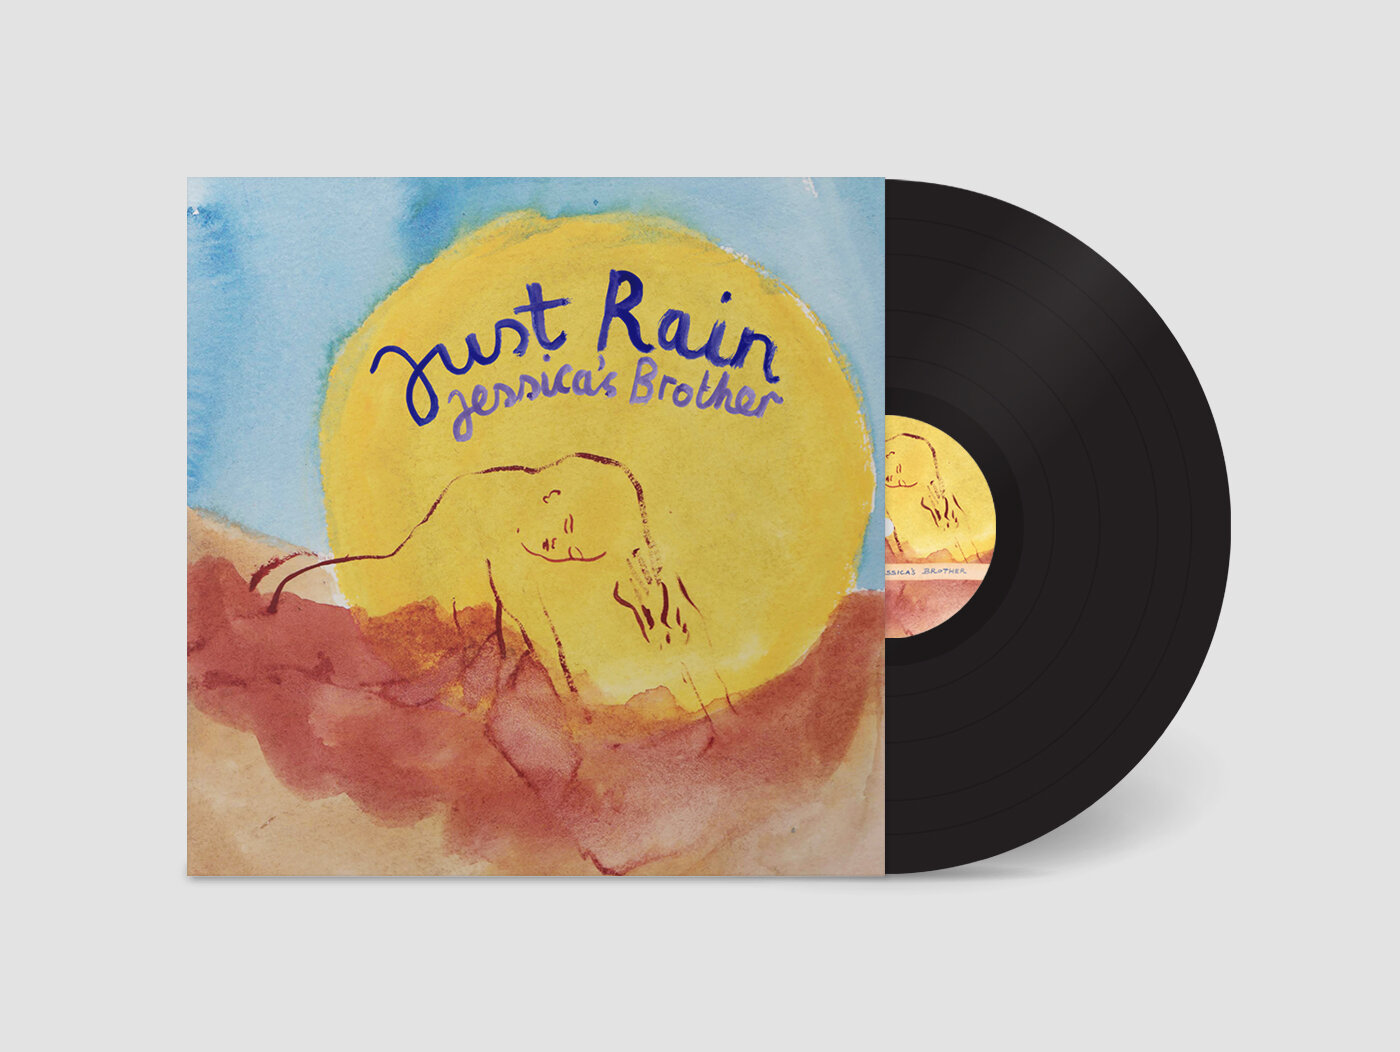 Just Rain vinyl.jpg